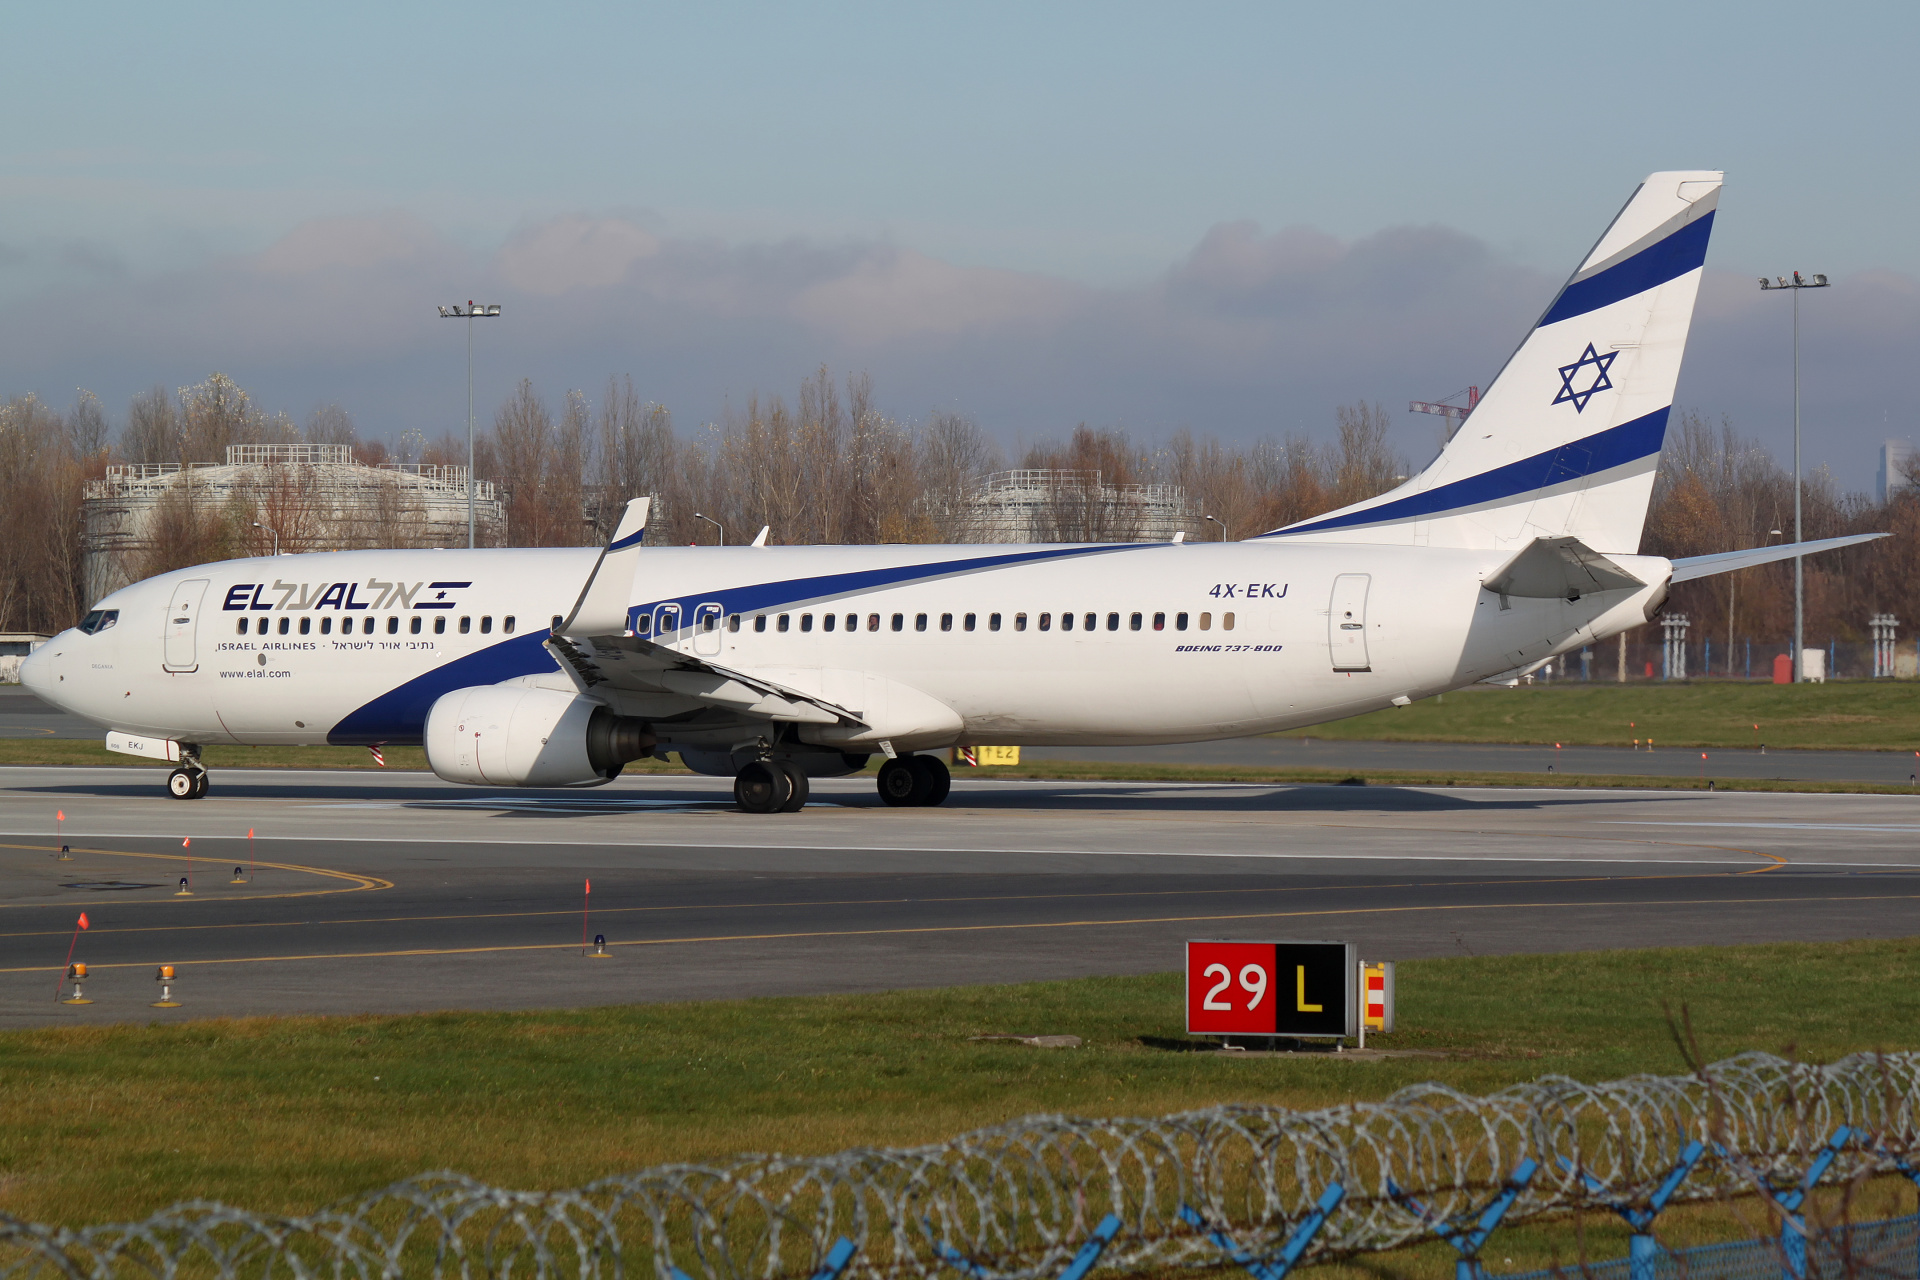 4X-EKJ (Aircraft » EPWA Spotting » Boeing 737-800 » El Al Israel Airlines)